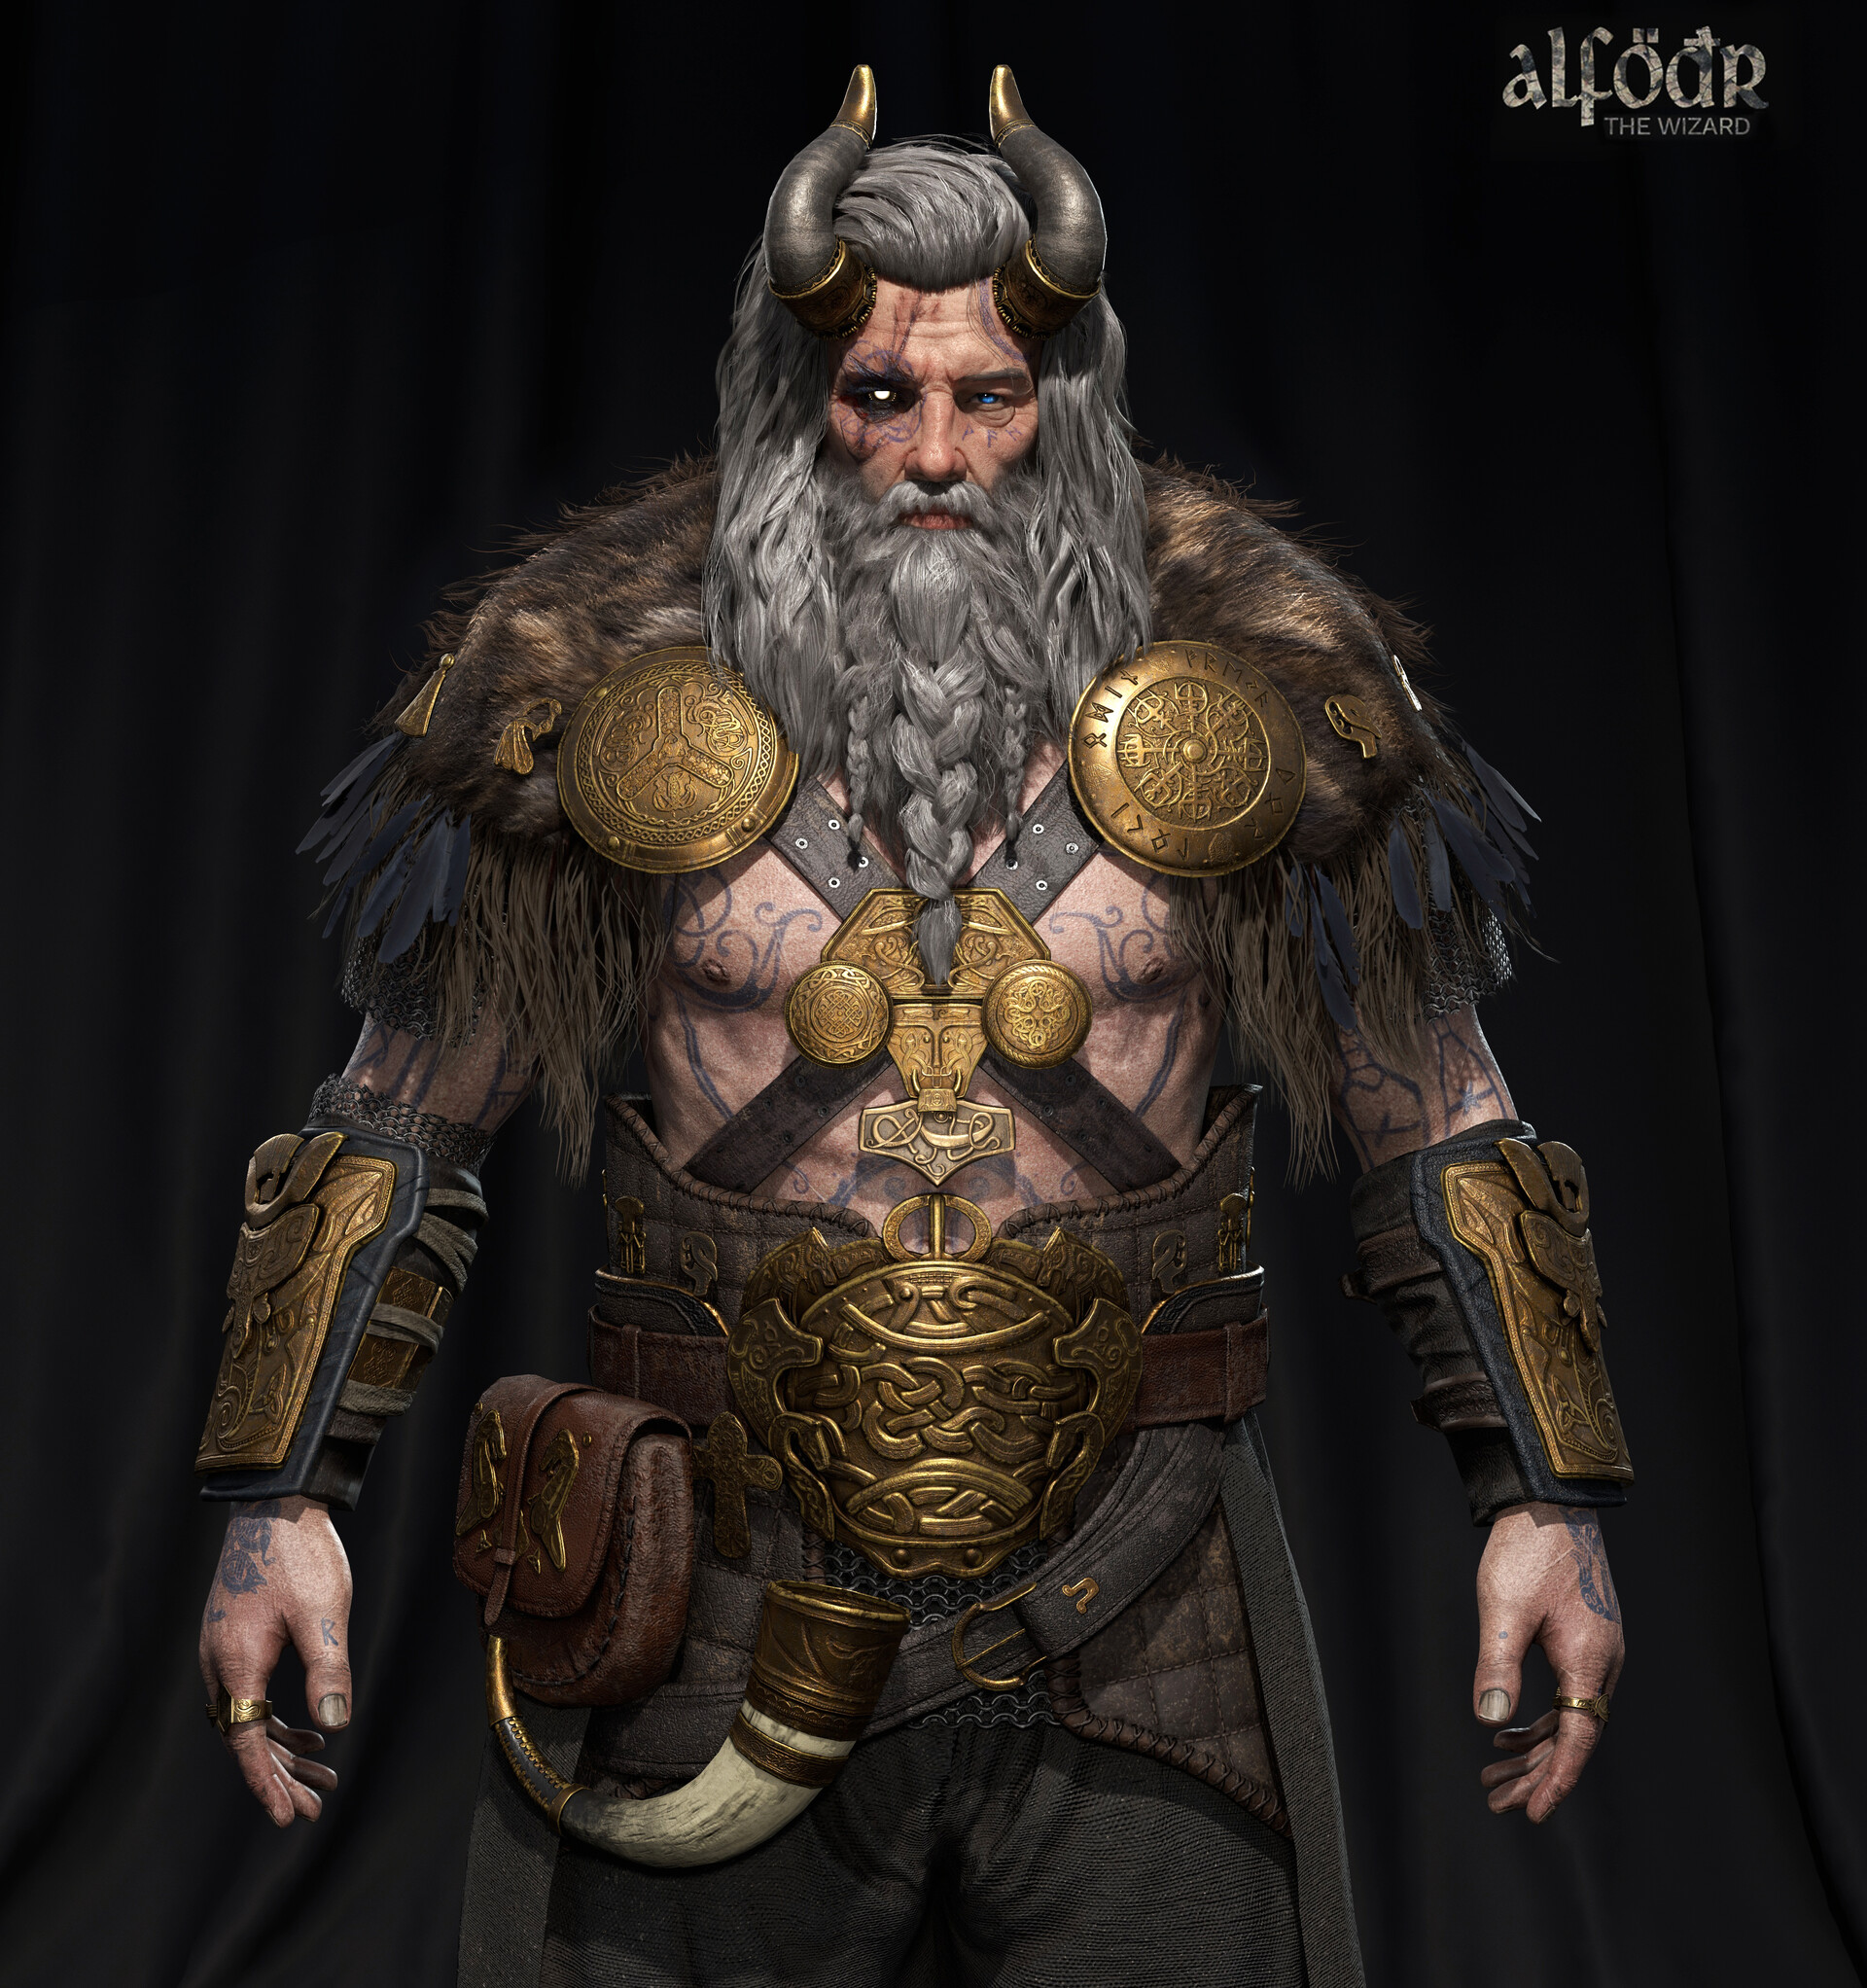 ArtStation - [God Of War Fan Theory] Ragnarok: Final Destiny of